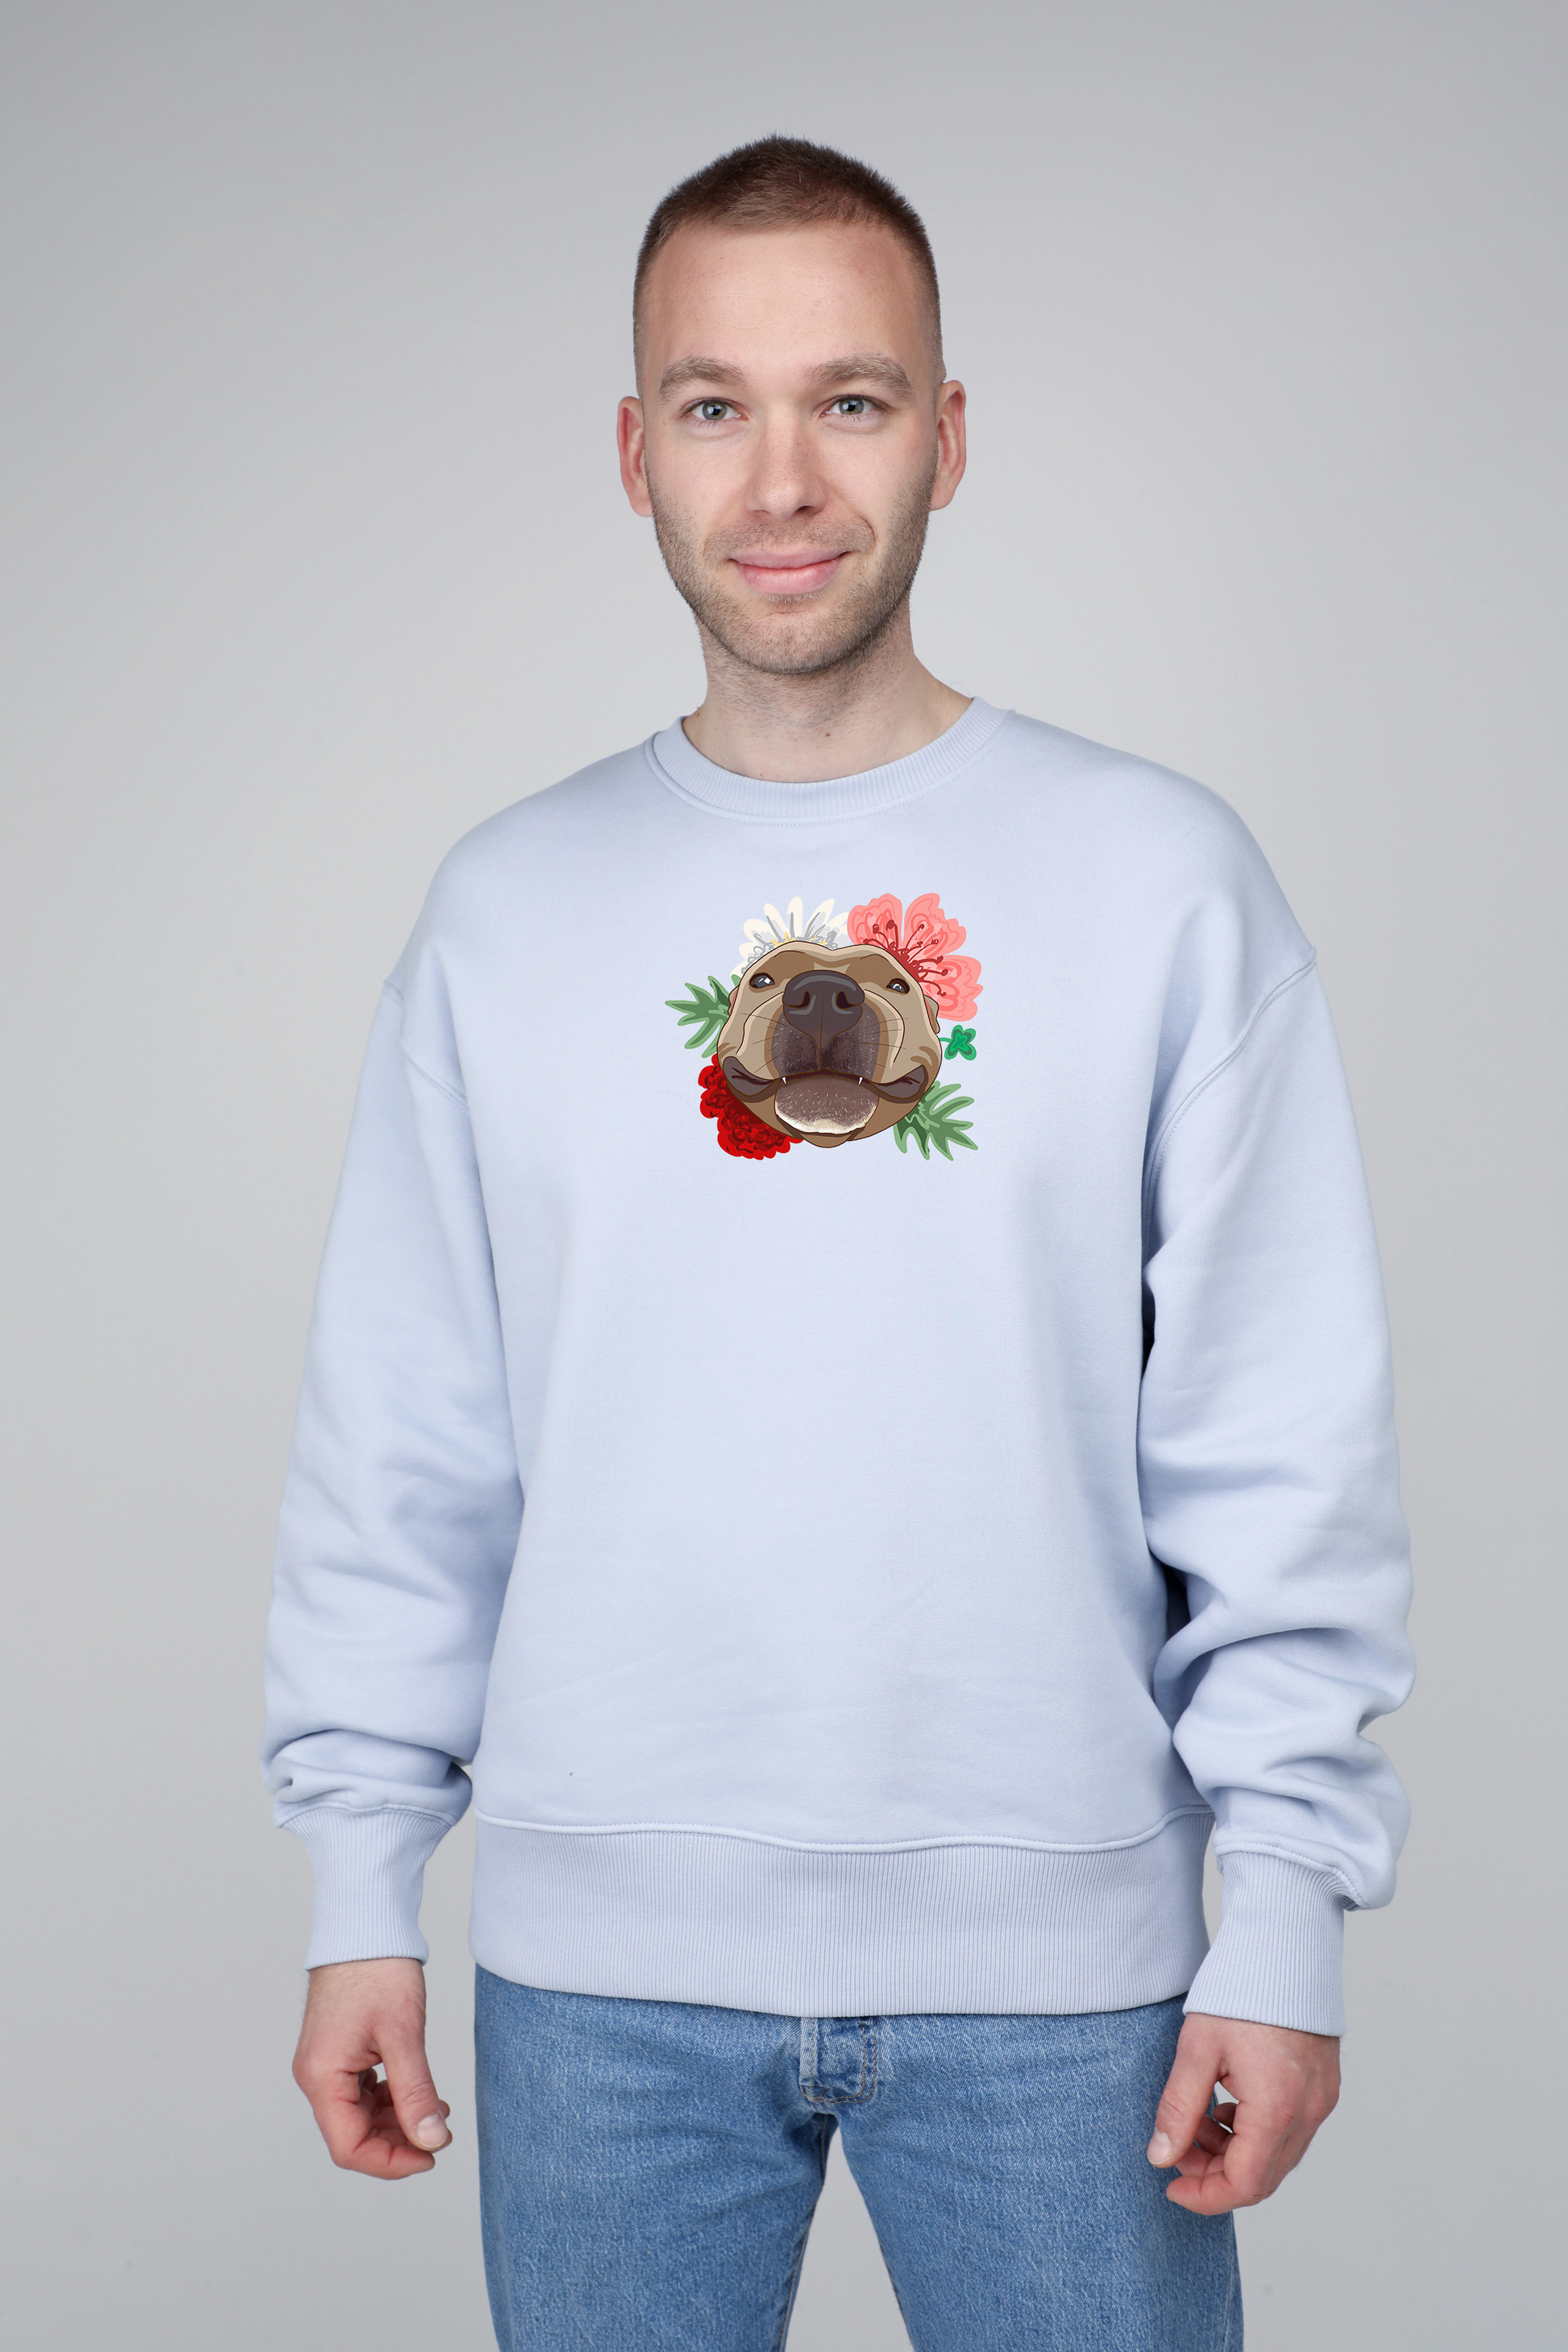 Serious dog with flowers | Crew neck sweatshirt with dog. Oversize fit | Unisex - premium dog goods handmade in Europe by animalistus